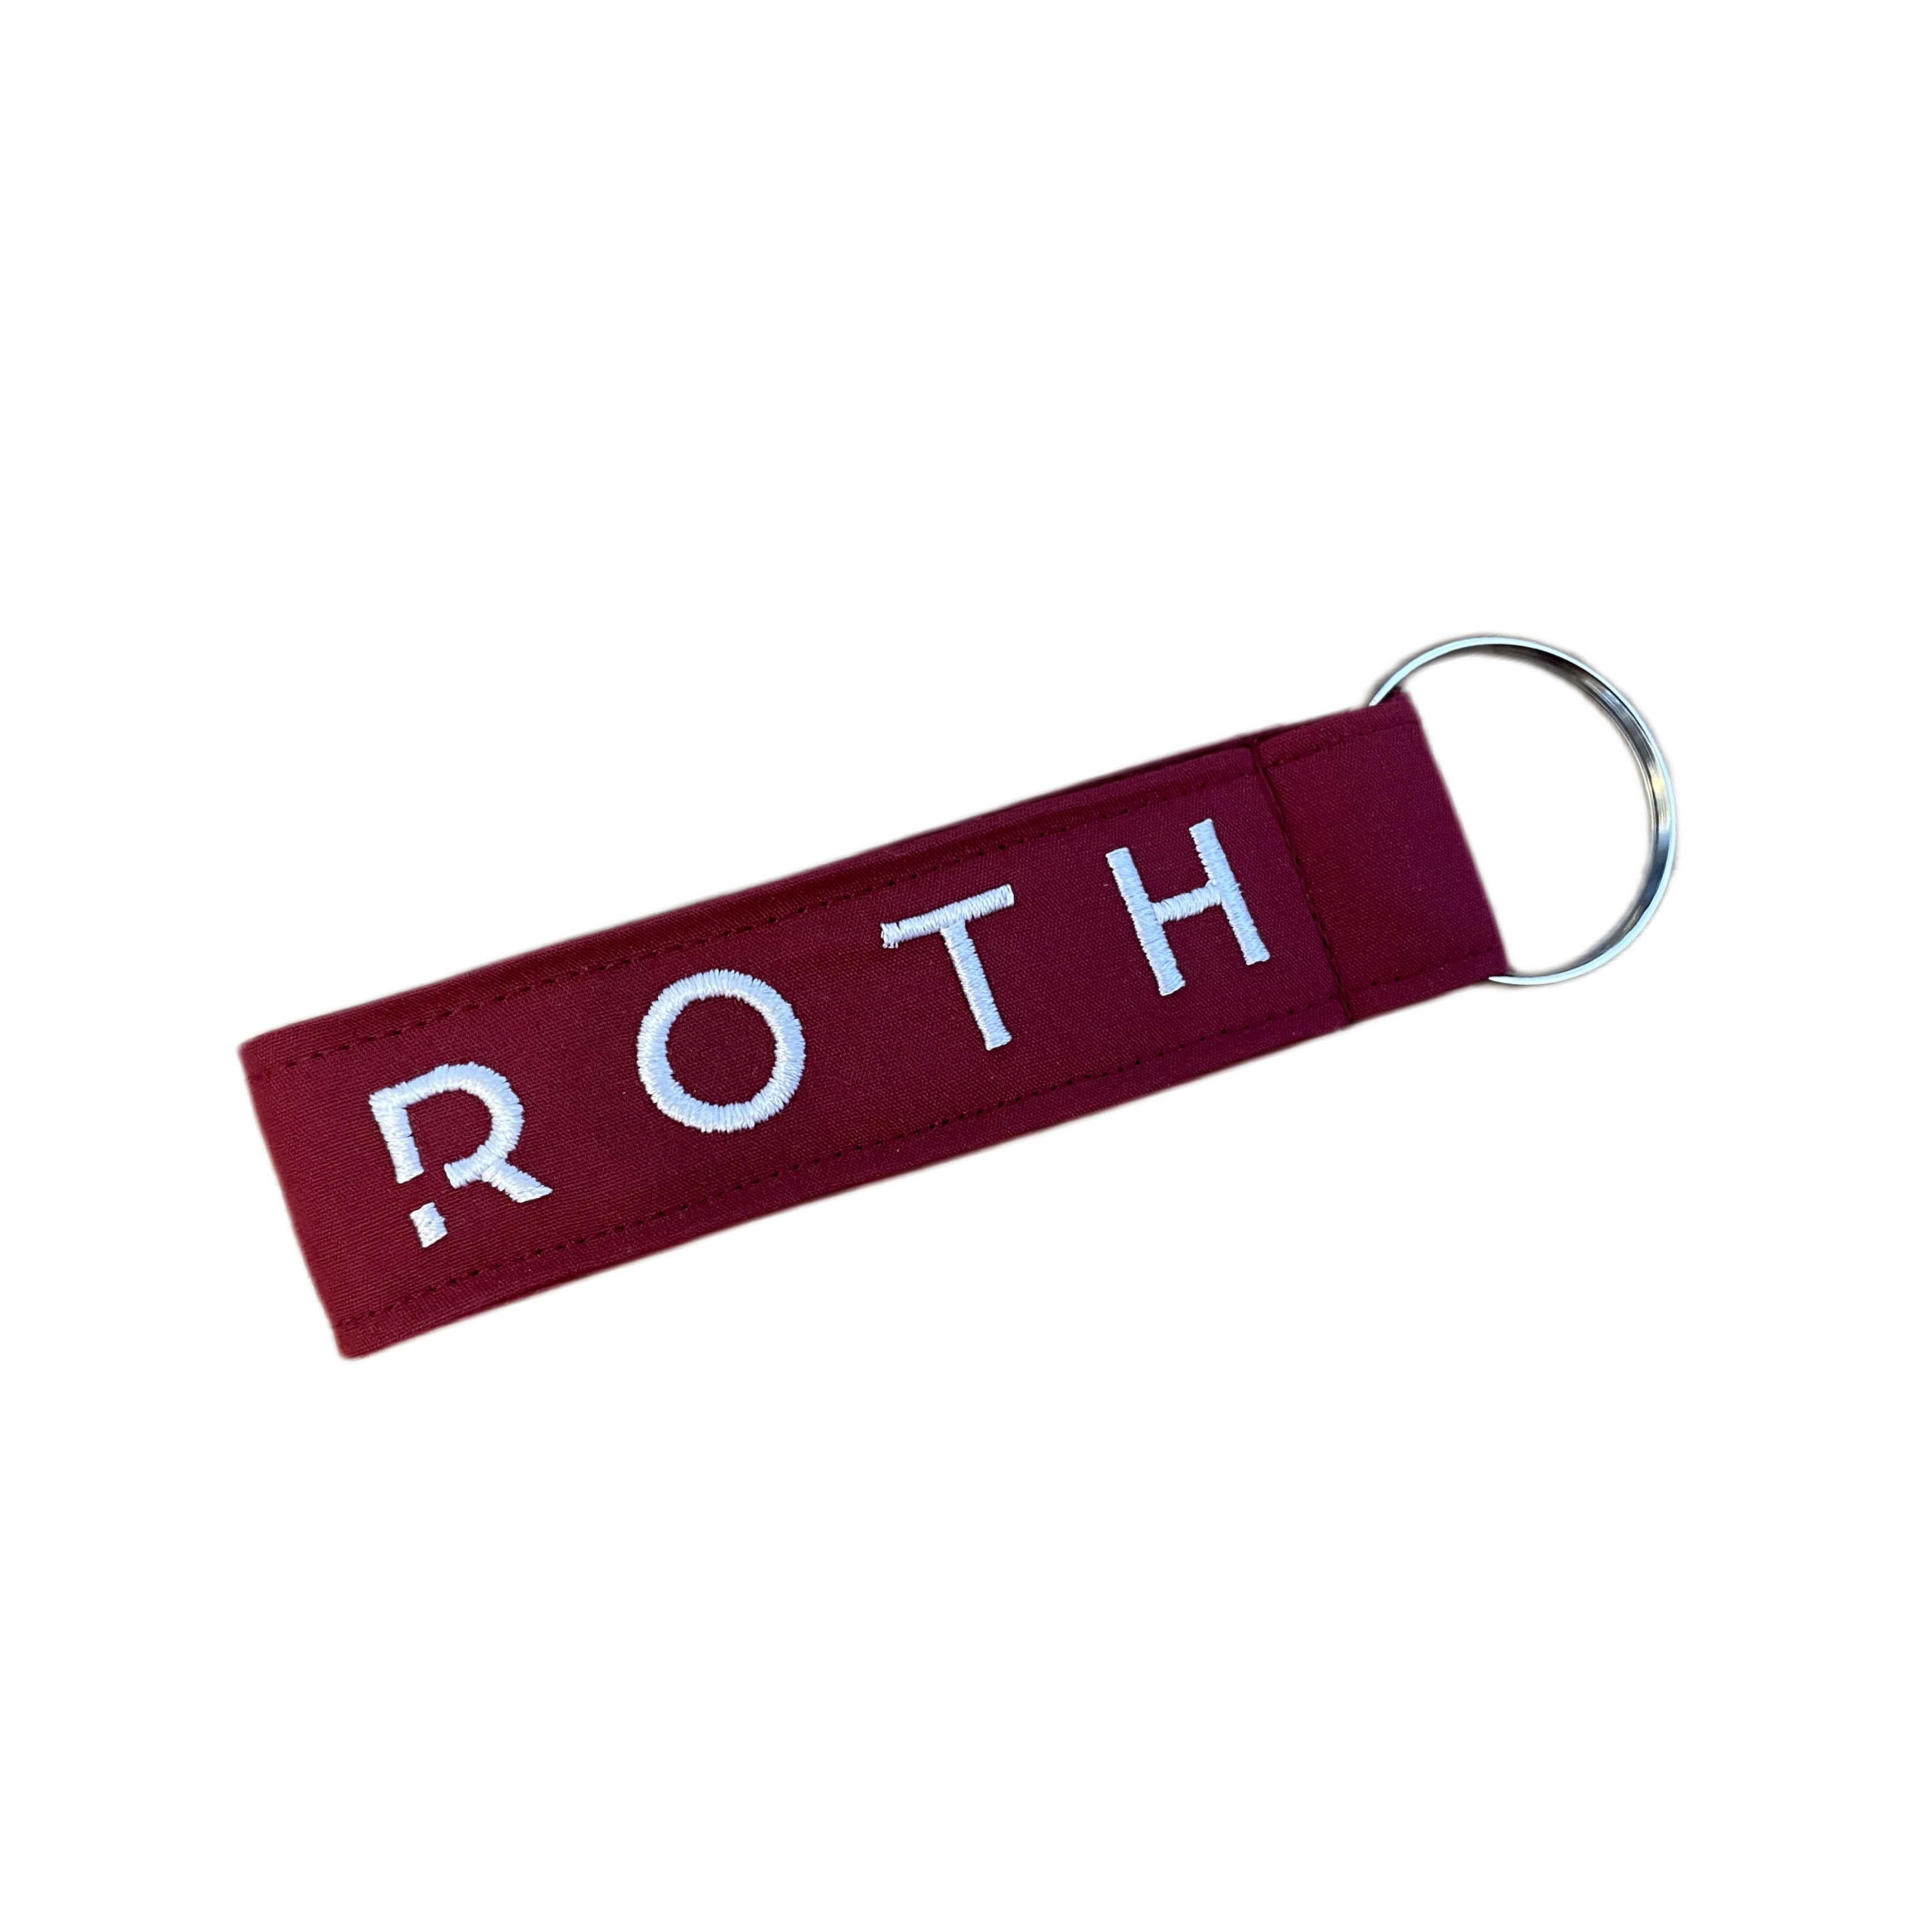 ROTH Felt Key Chain made in germany